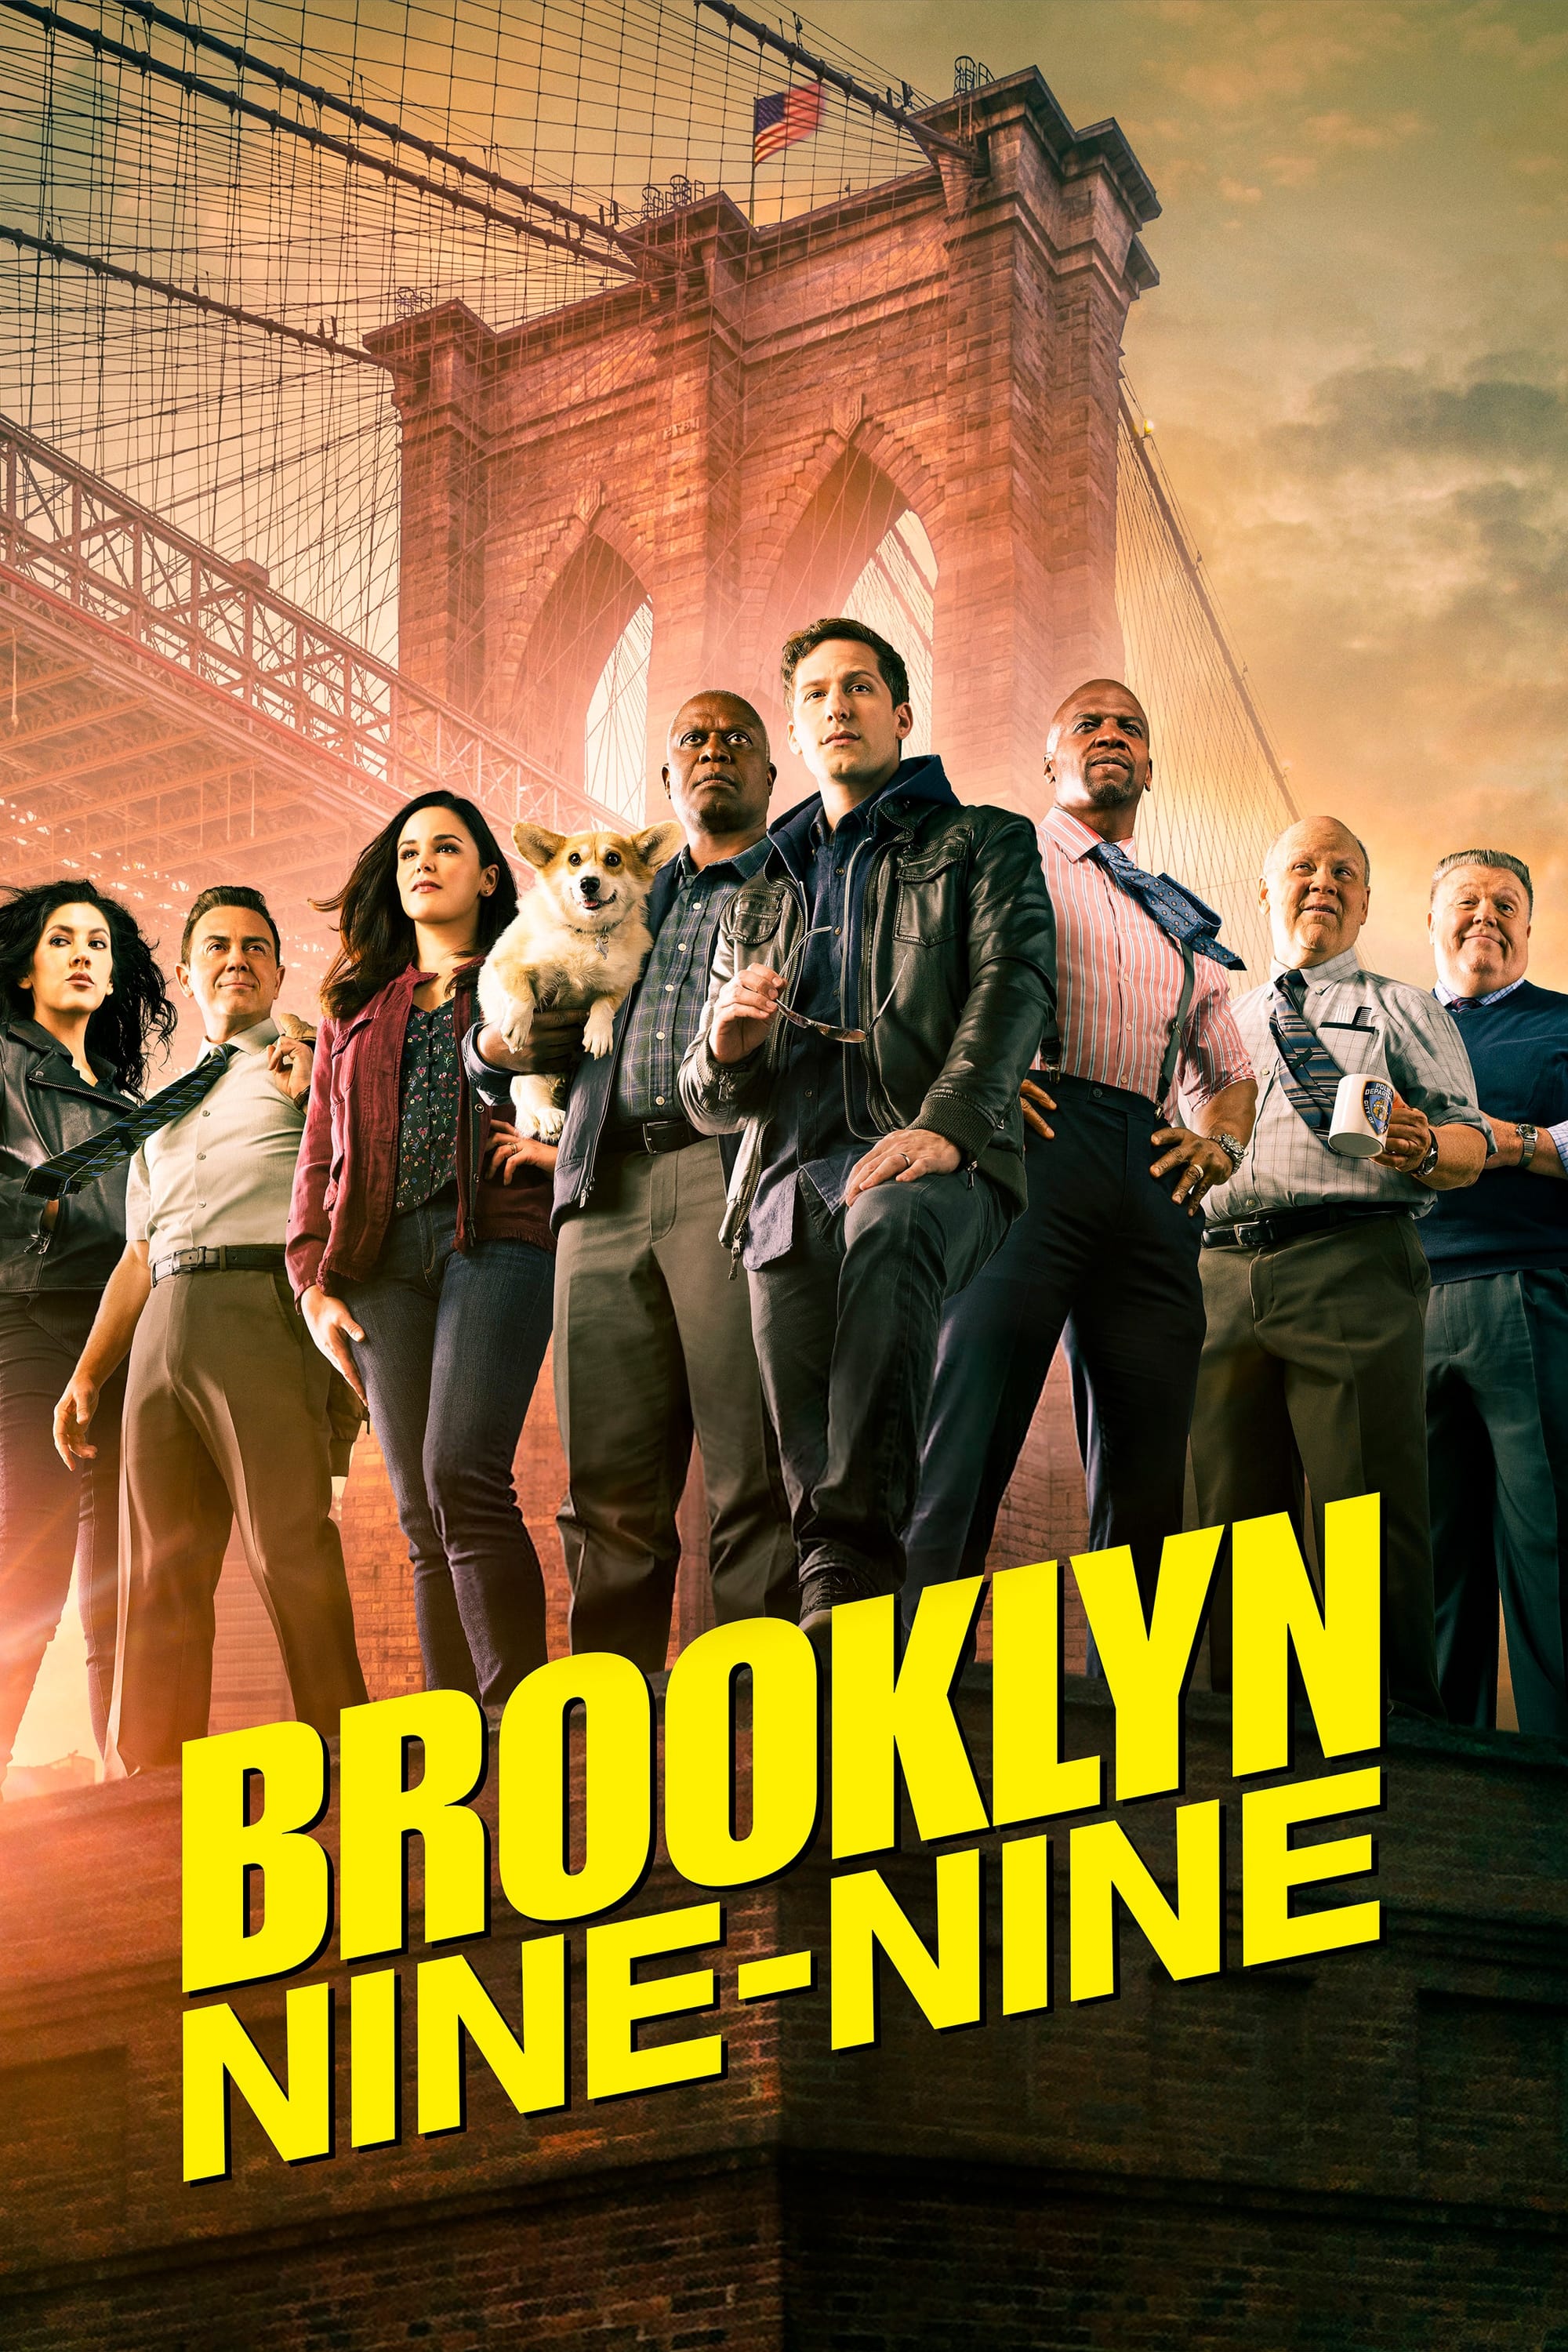 Brooklyn Nine-Nine: Lei e Desordem